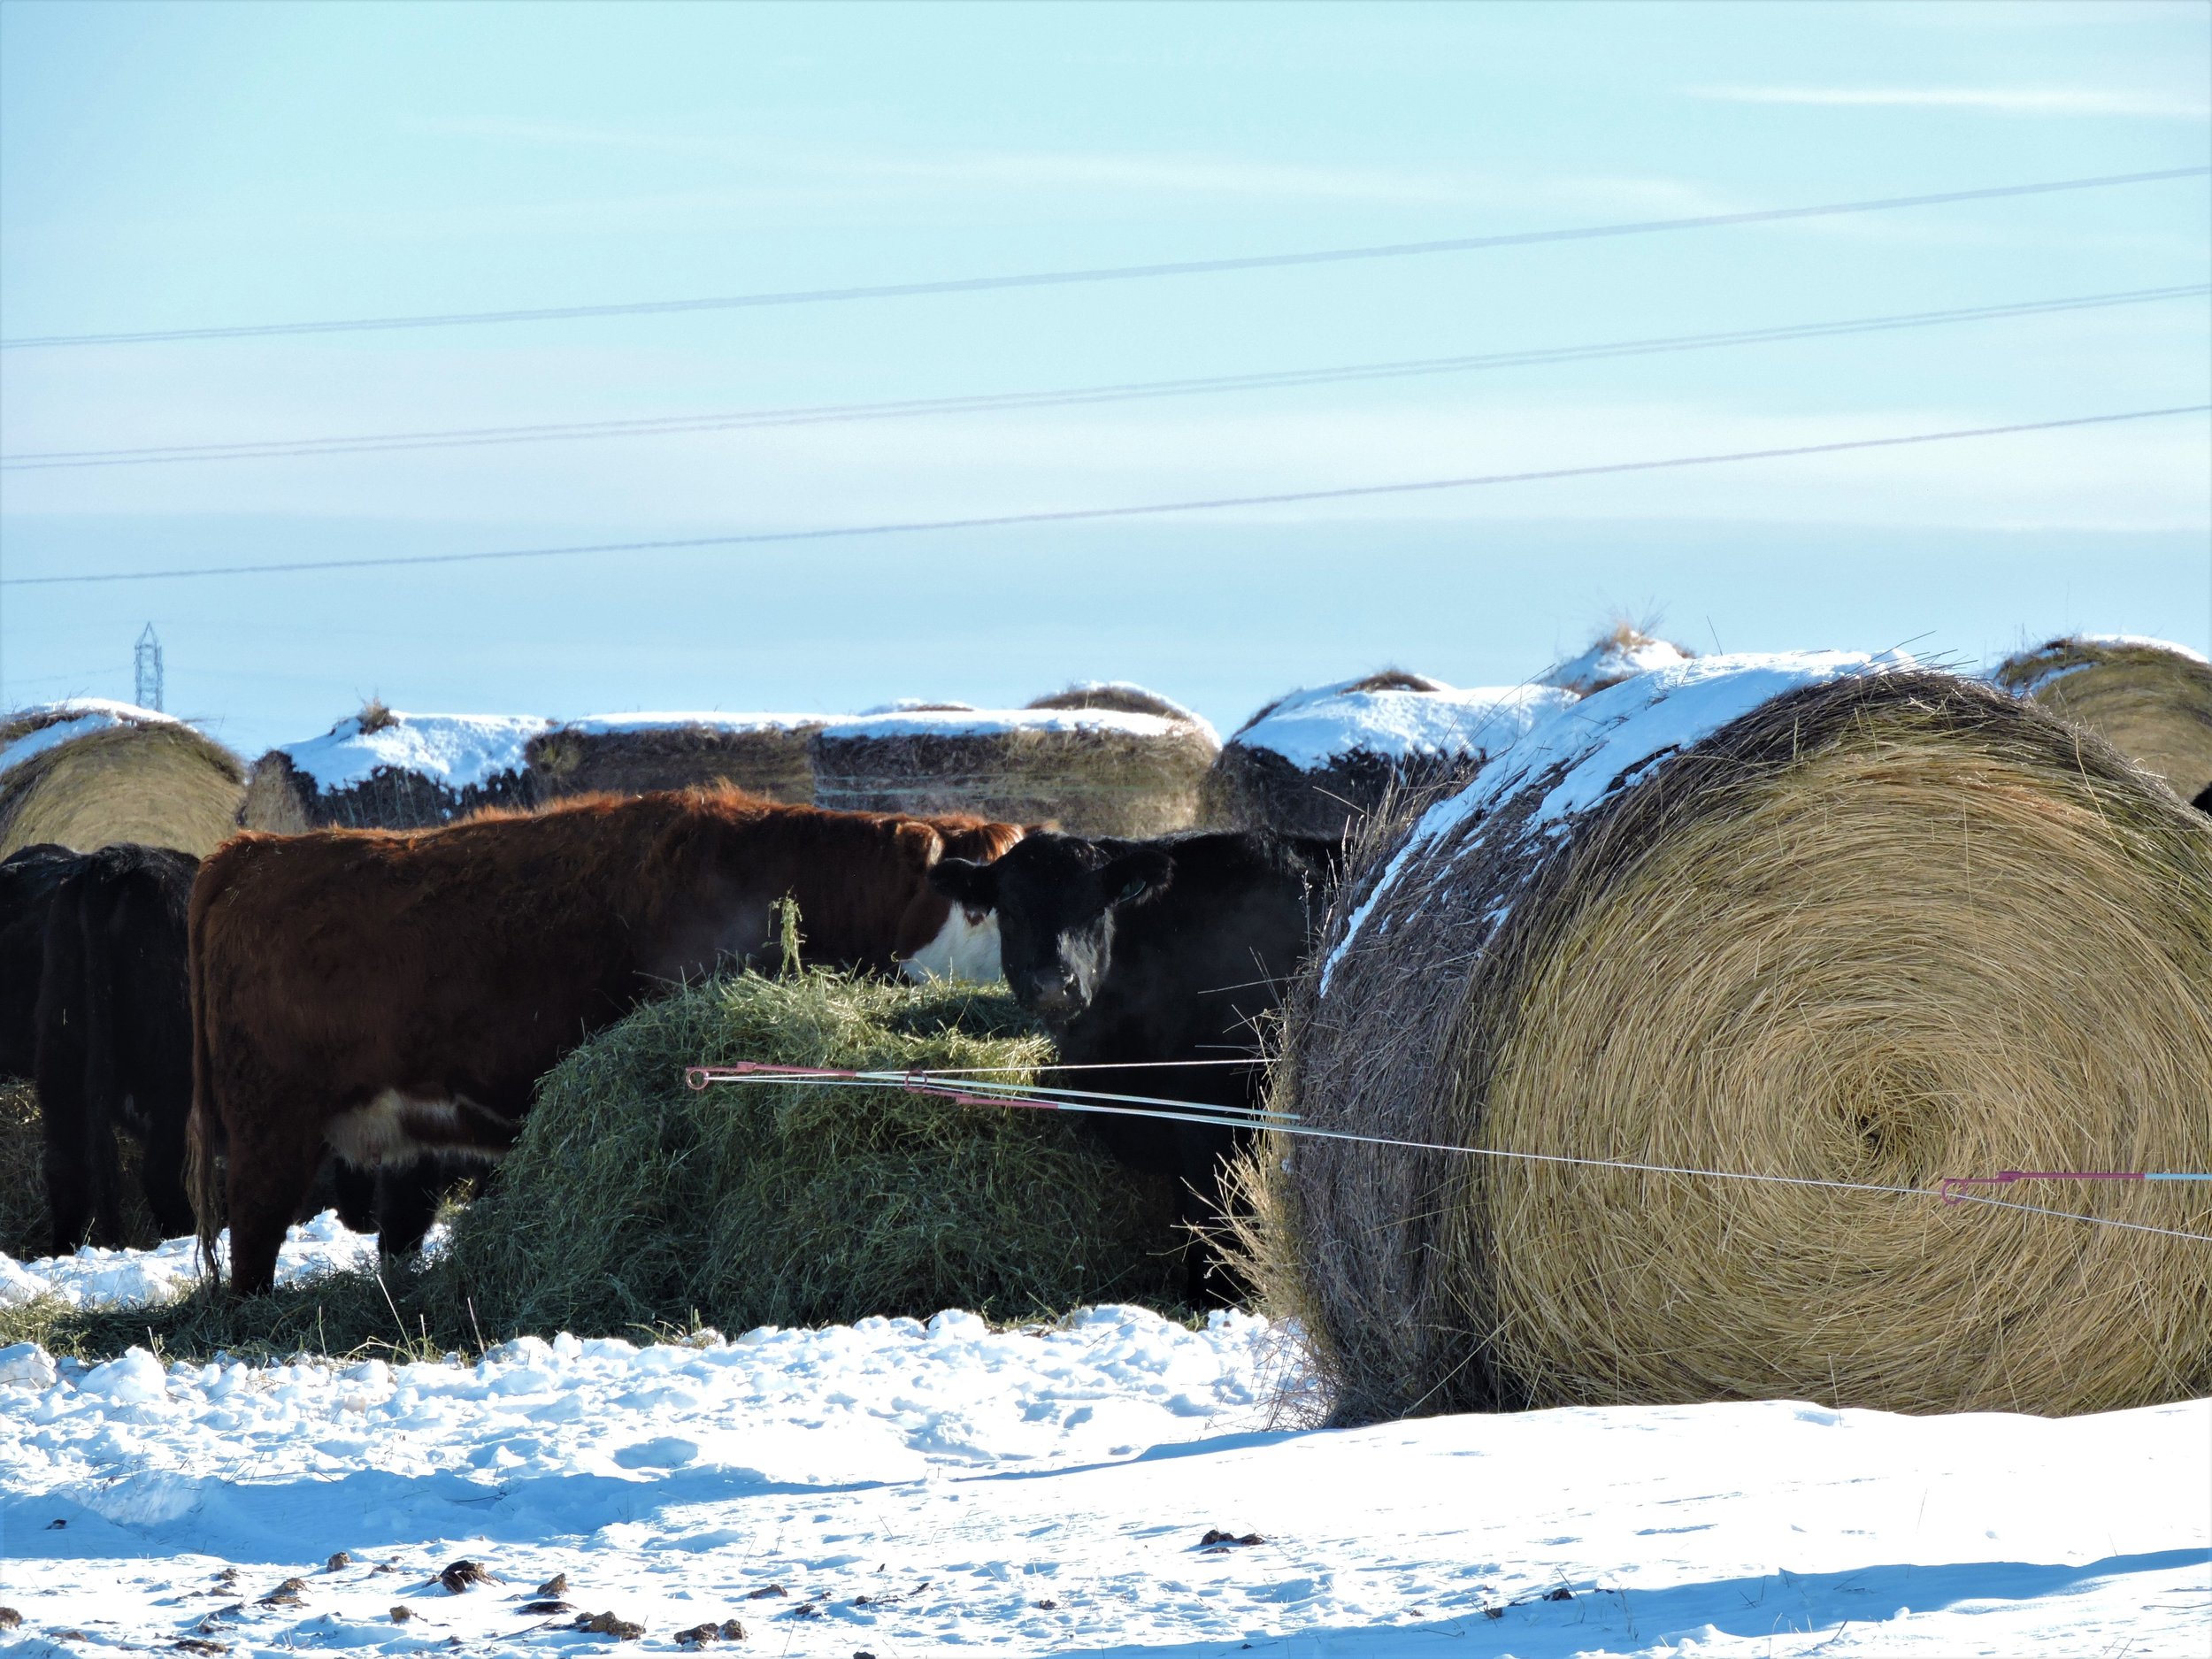 Cattle grazing pod 2, February 1, 2020. Photo credit MBFI.